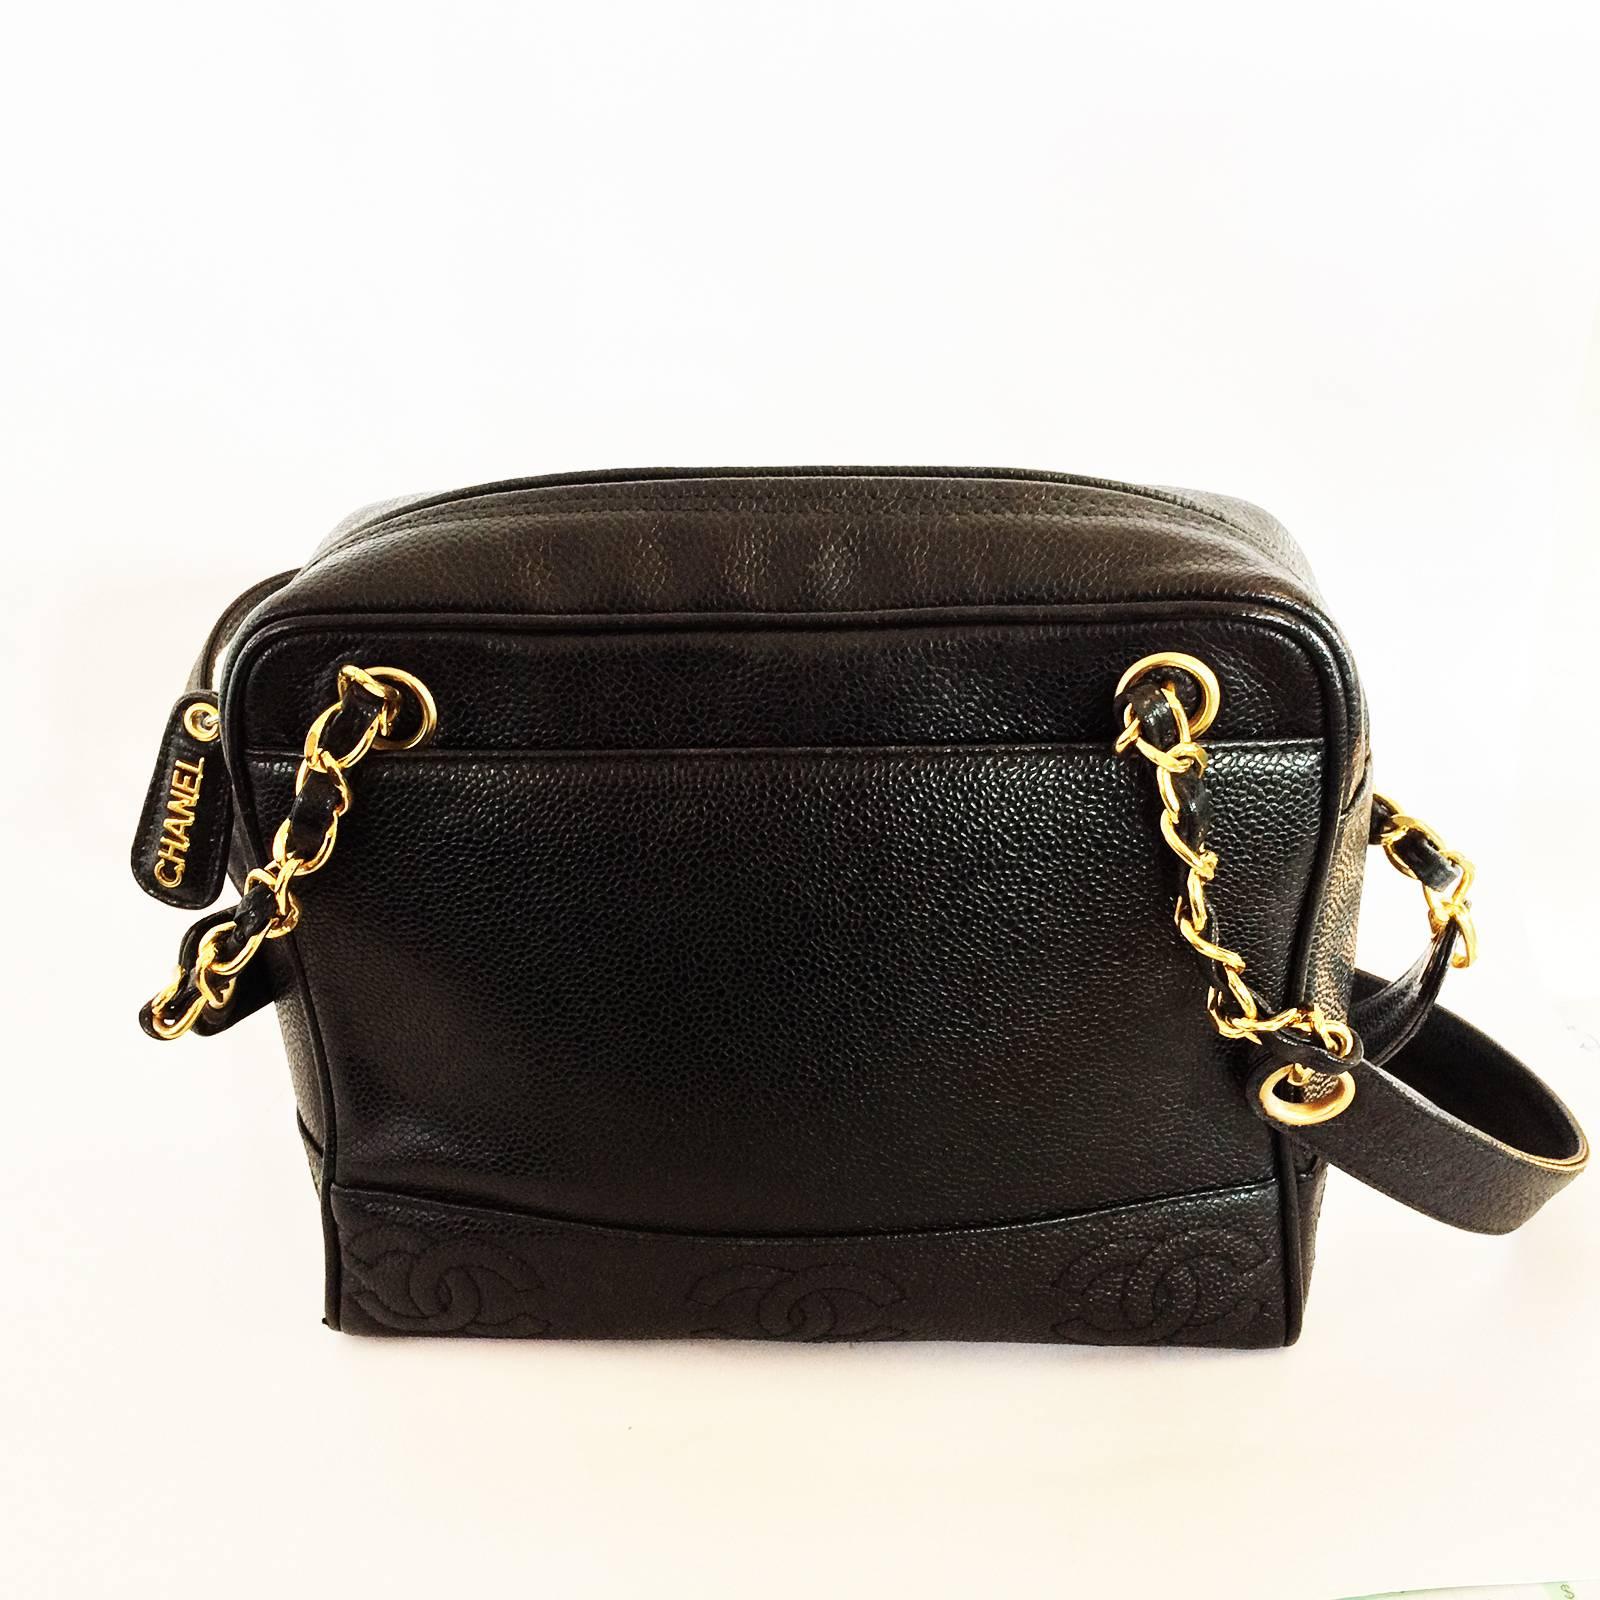 Chanel black caviar leather crossbody bag handbag 1